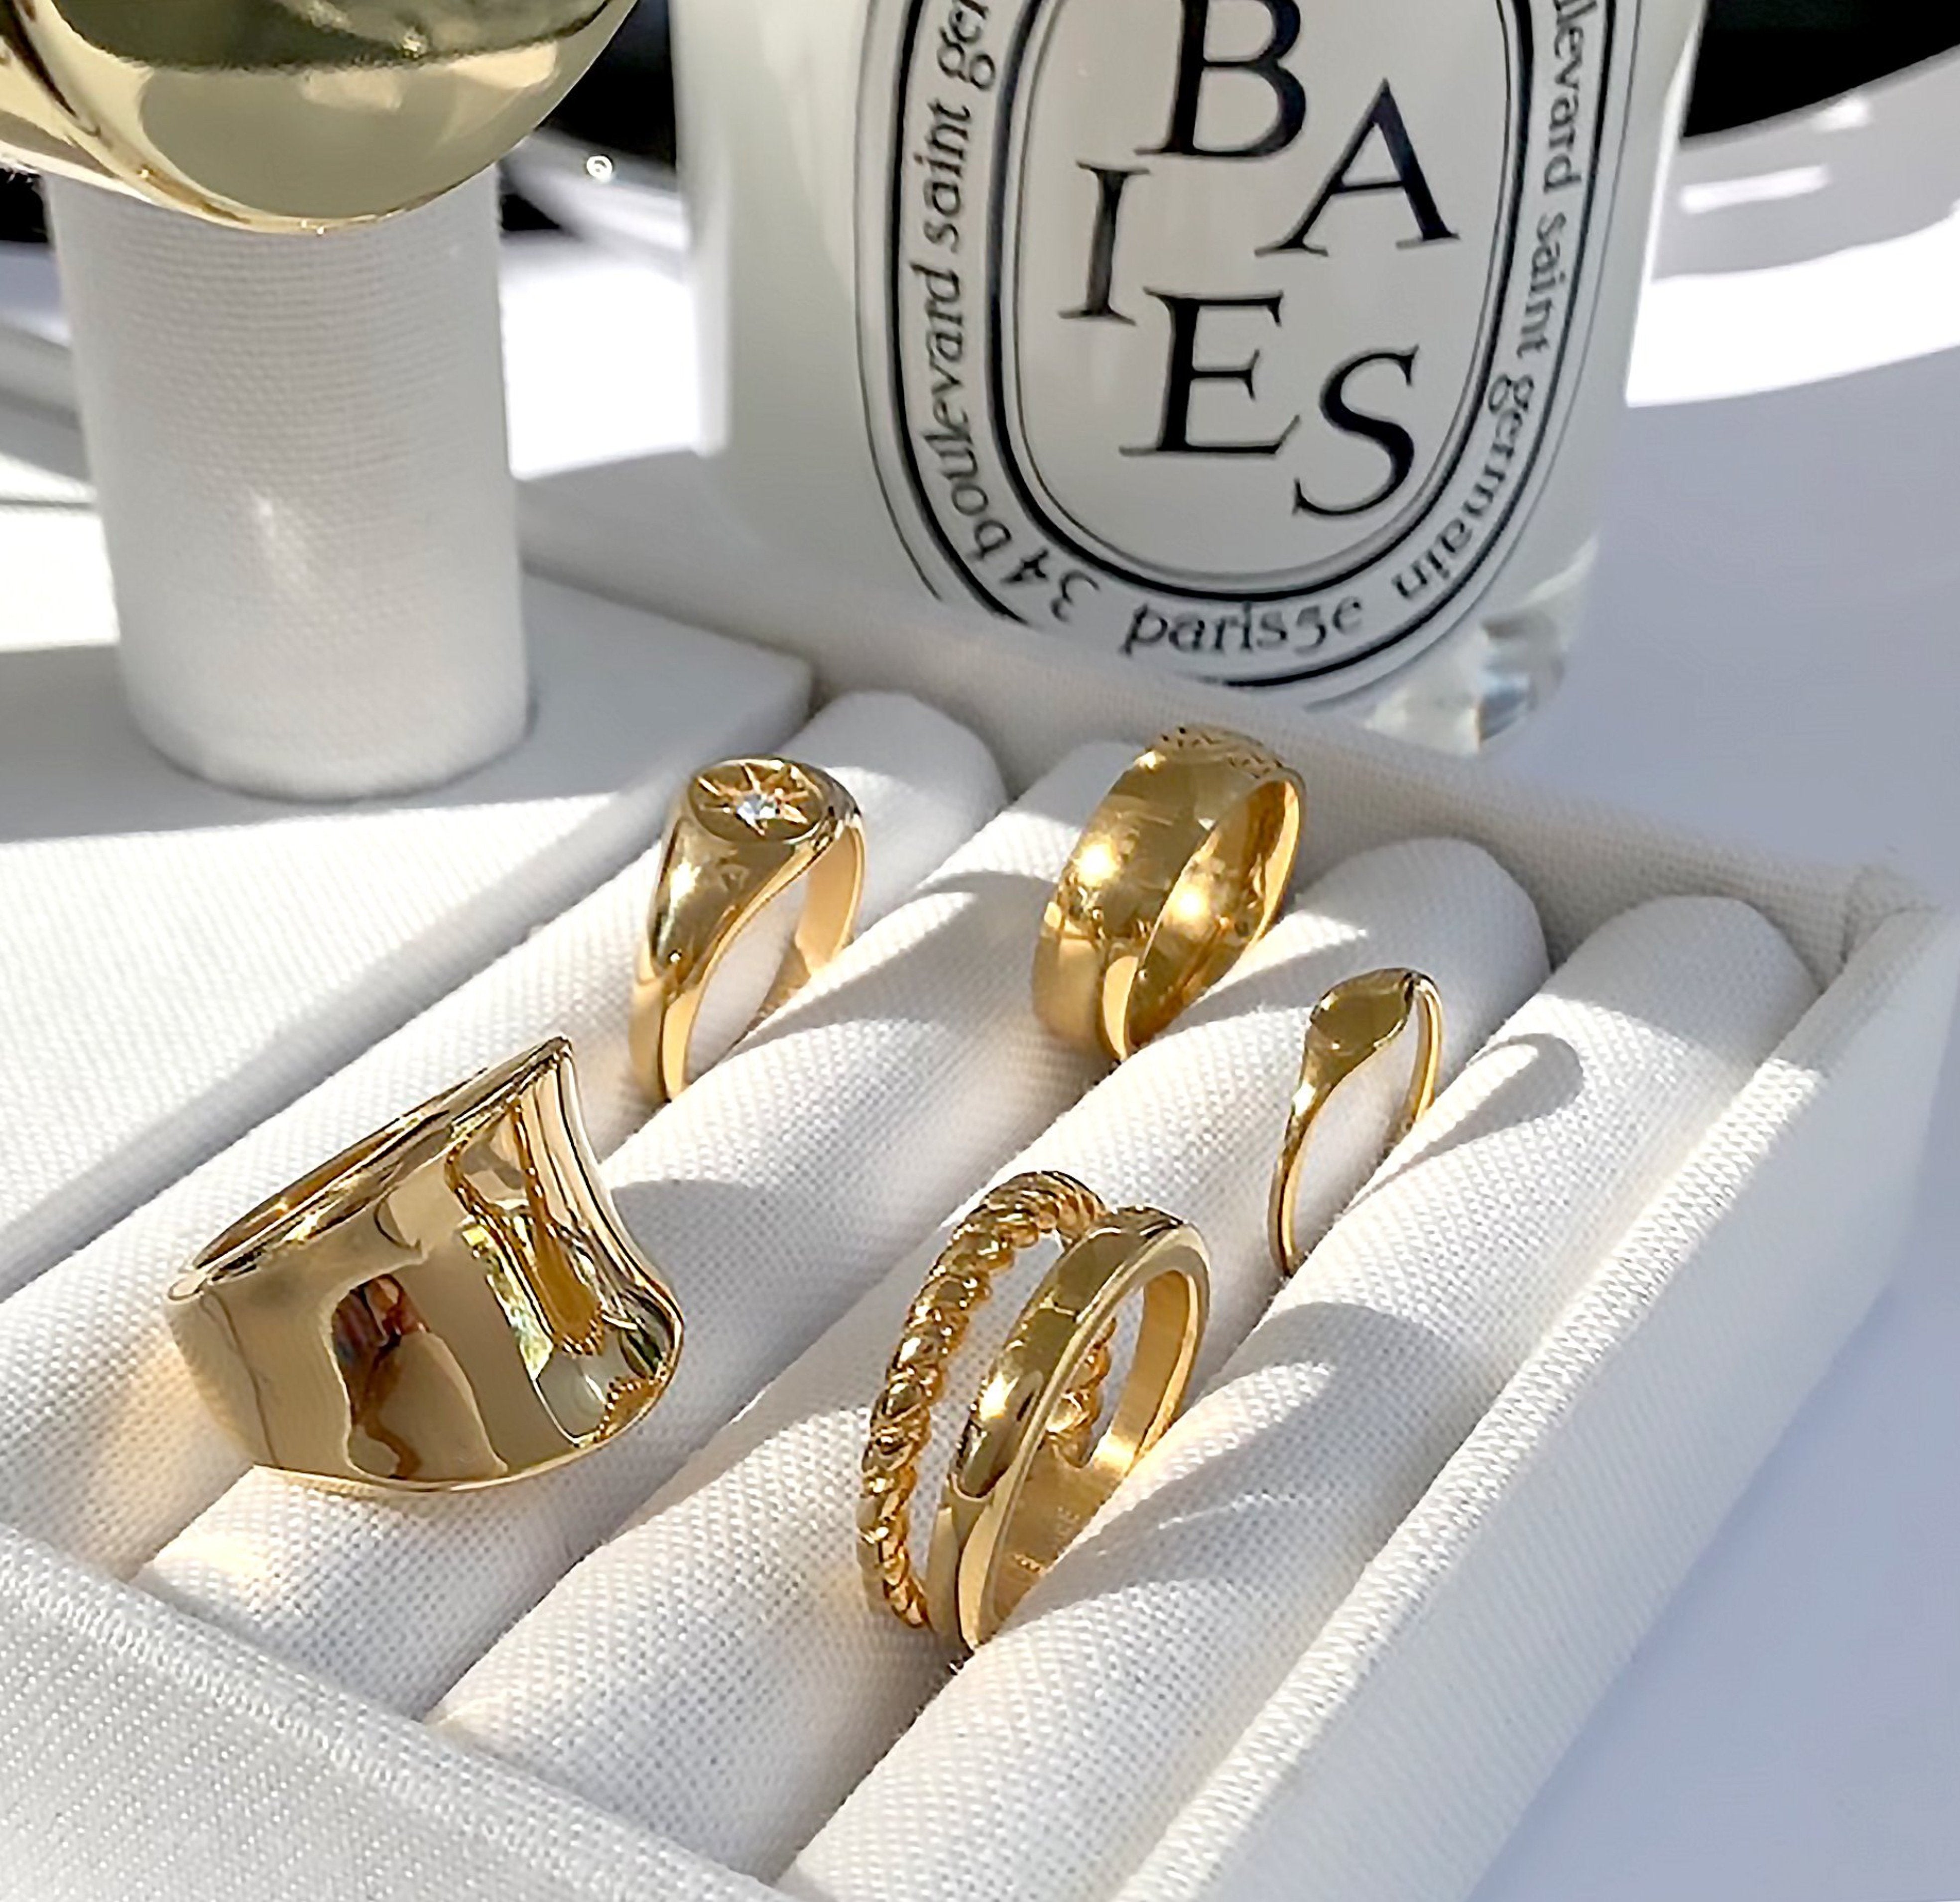 gold rings waterproof jewelry